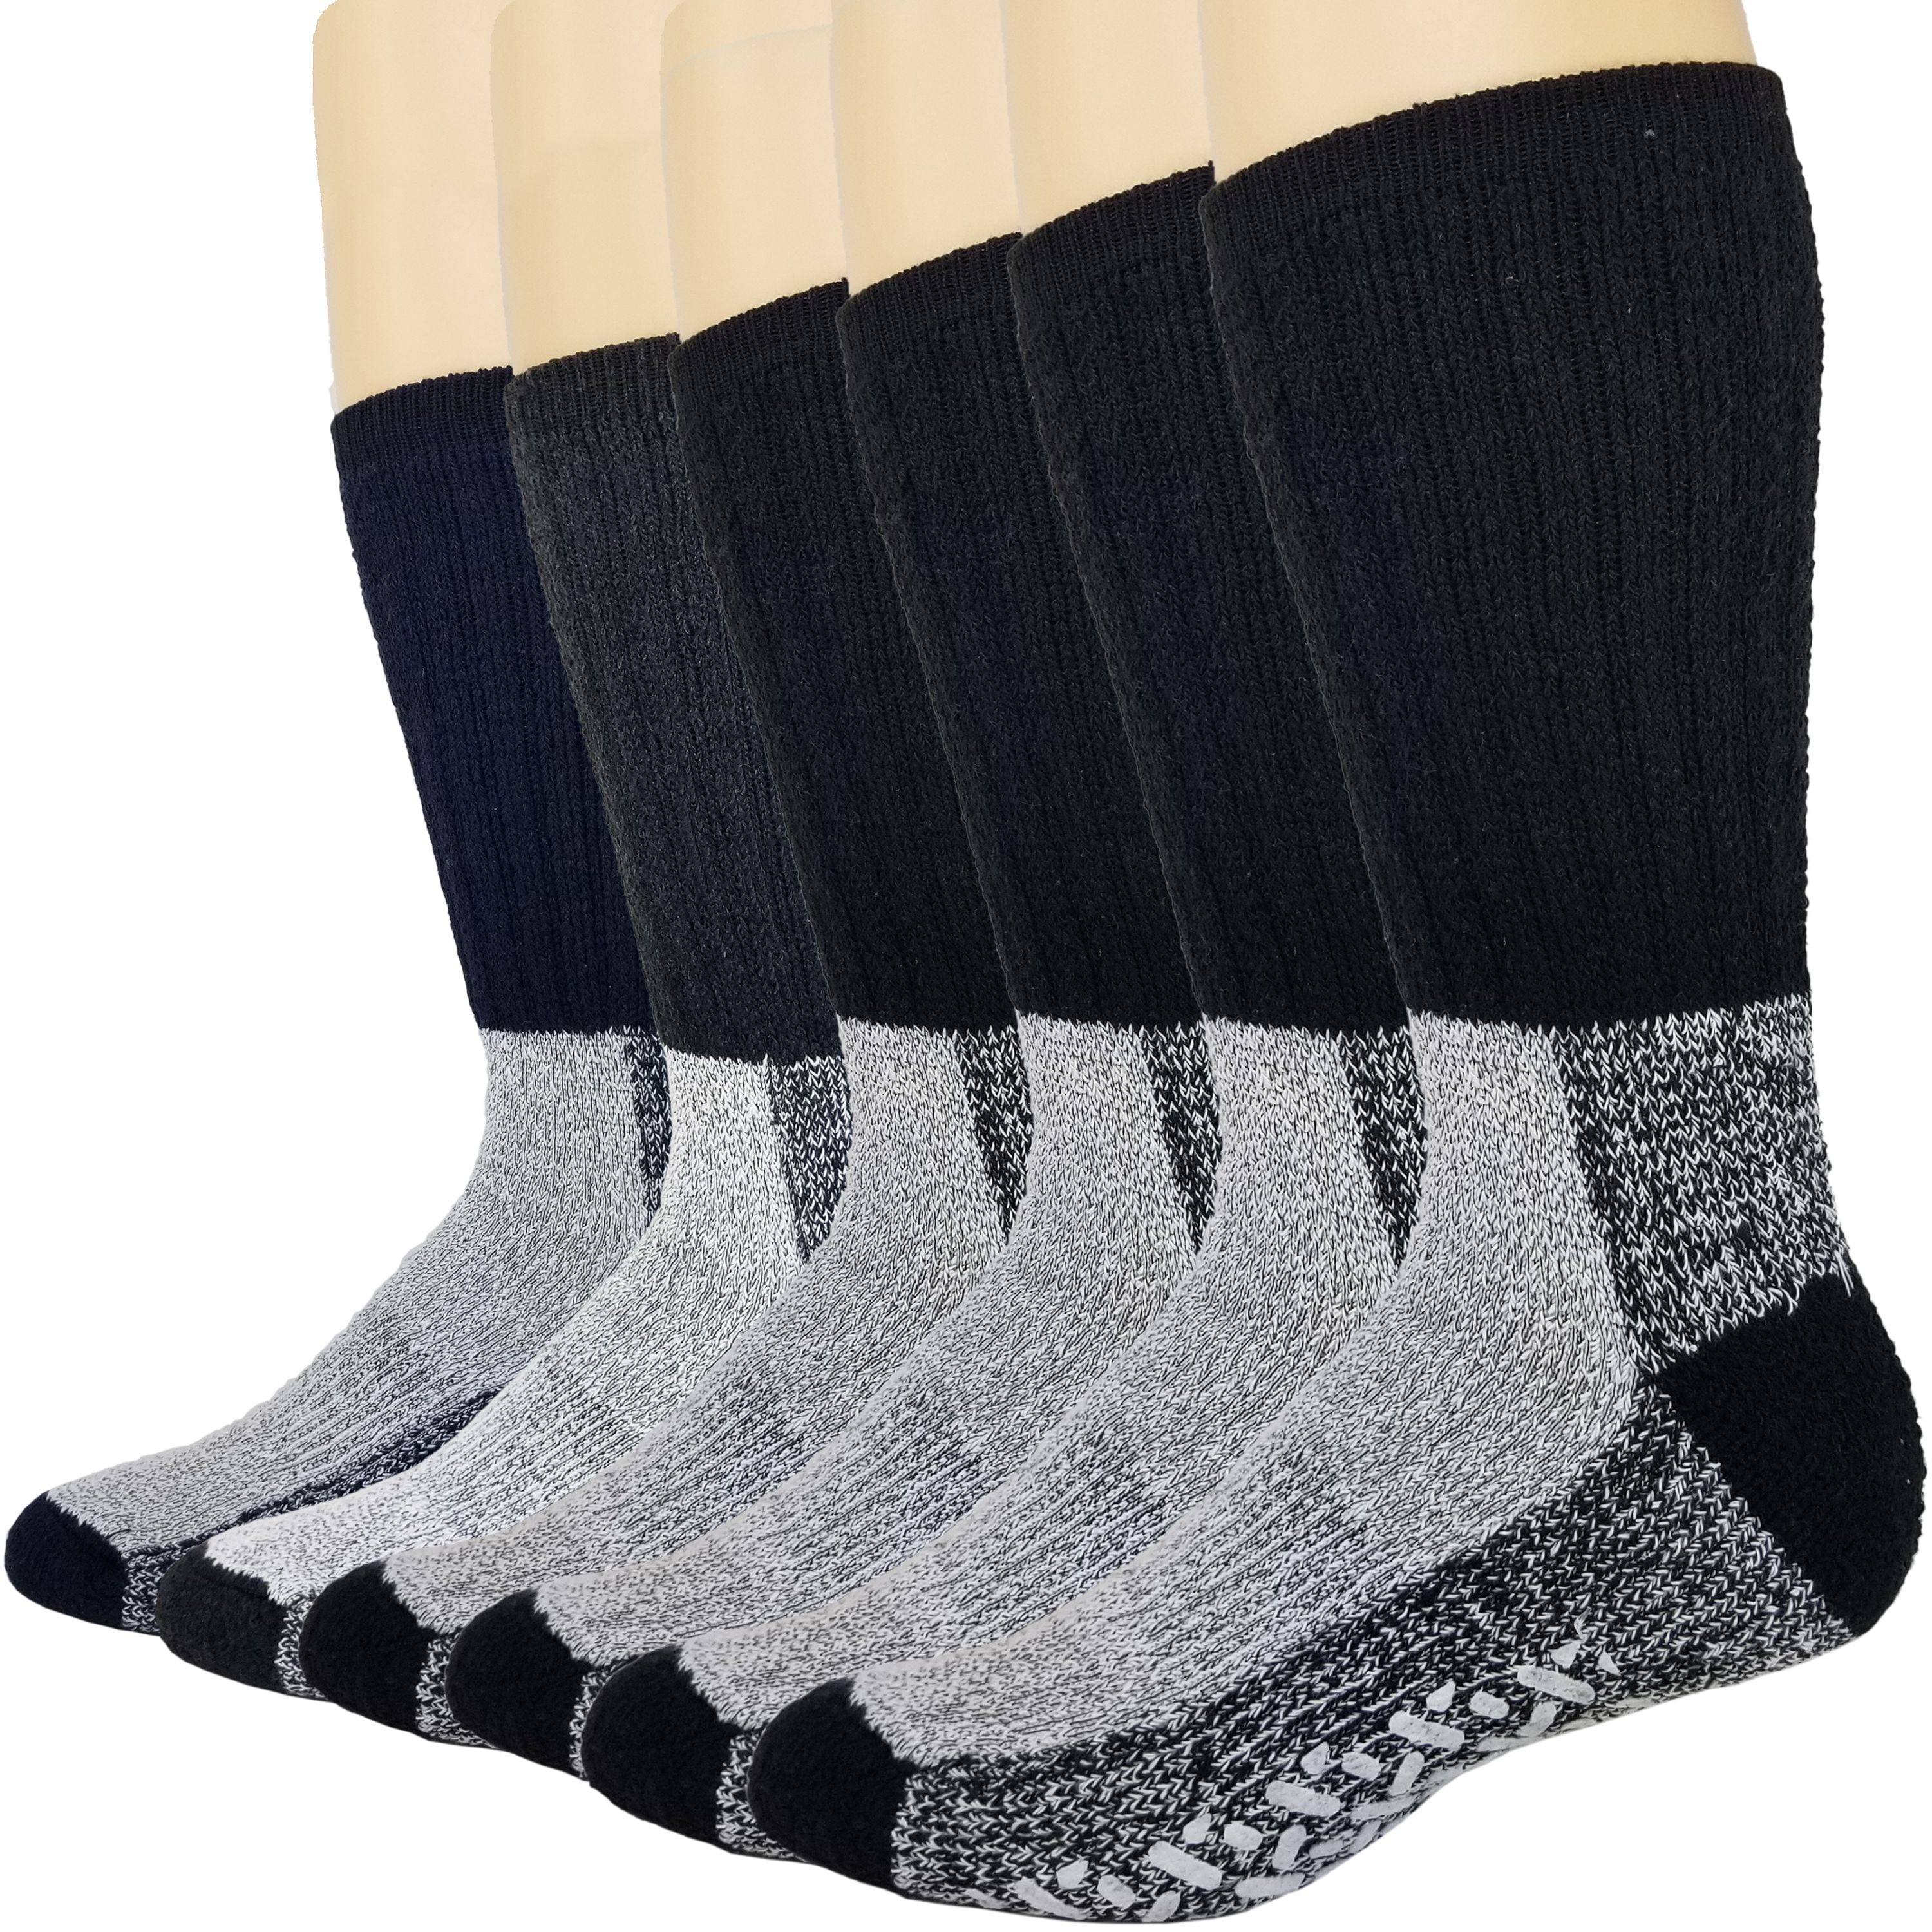 ZEAL WOOD Unisex Hiking Trekking Quarter Socks Thermal Warm Winter Socks,1/2/4 Pairs Merino Wool Socks